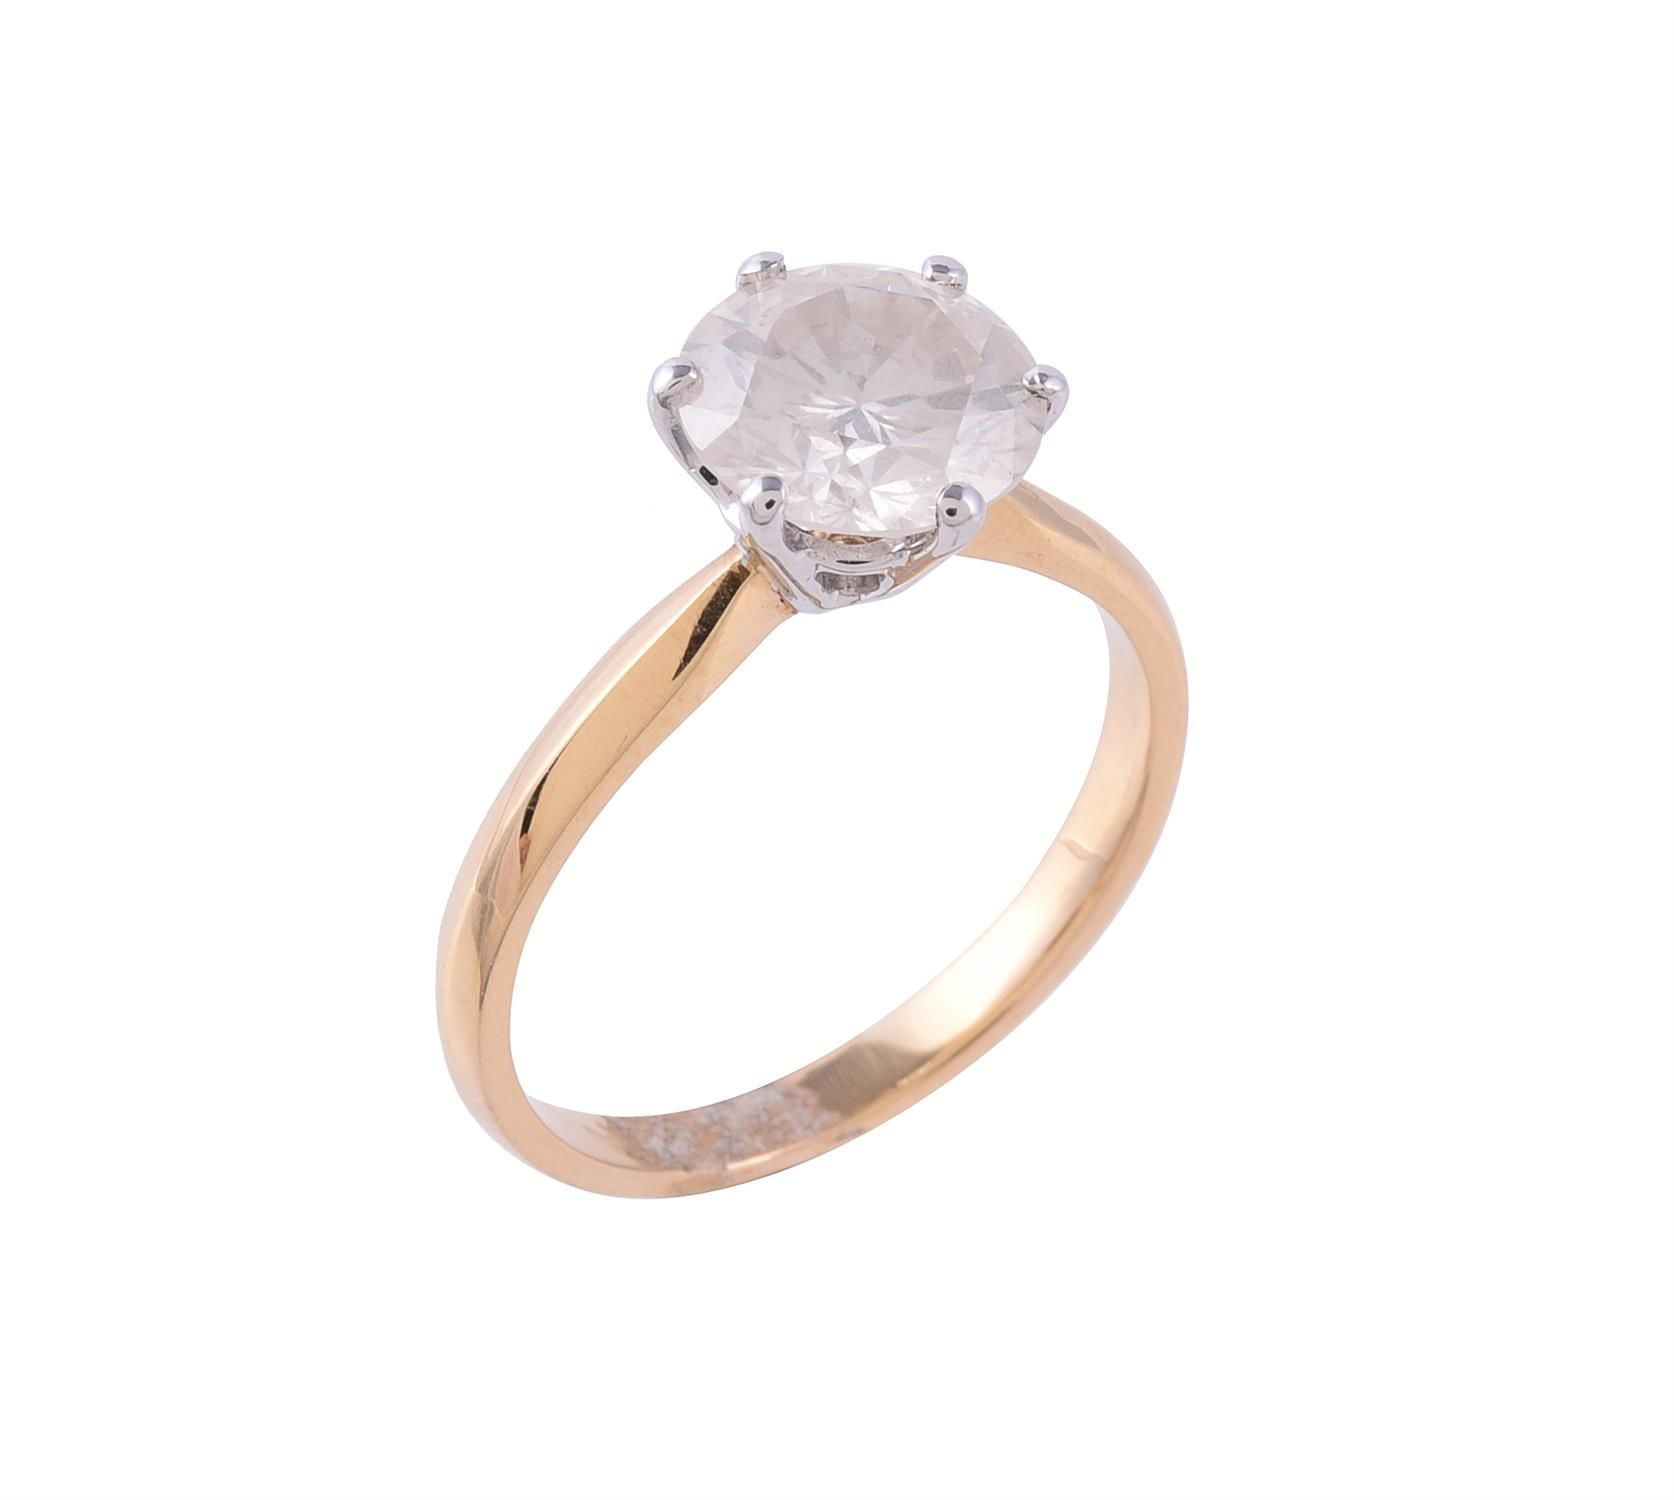 A single stone diamond ring 单石钻石戒指，明亮式切割钻石估计重1.80克拉，六爪镶嵌，手指尺寸L 1/2，总重3克